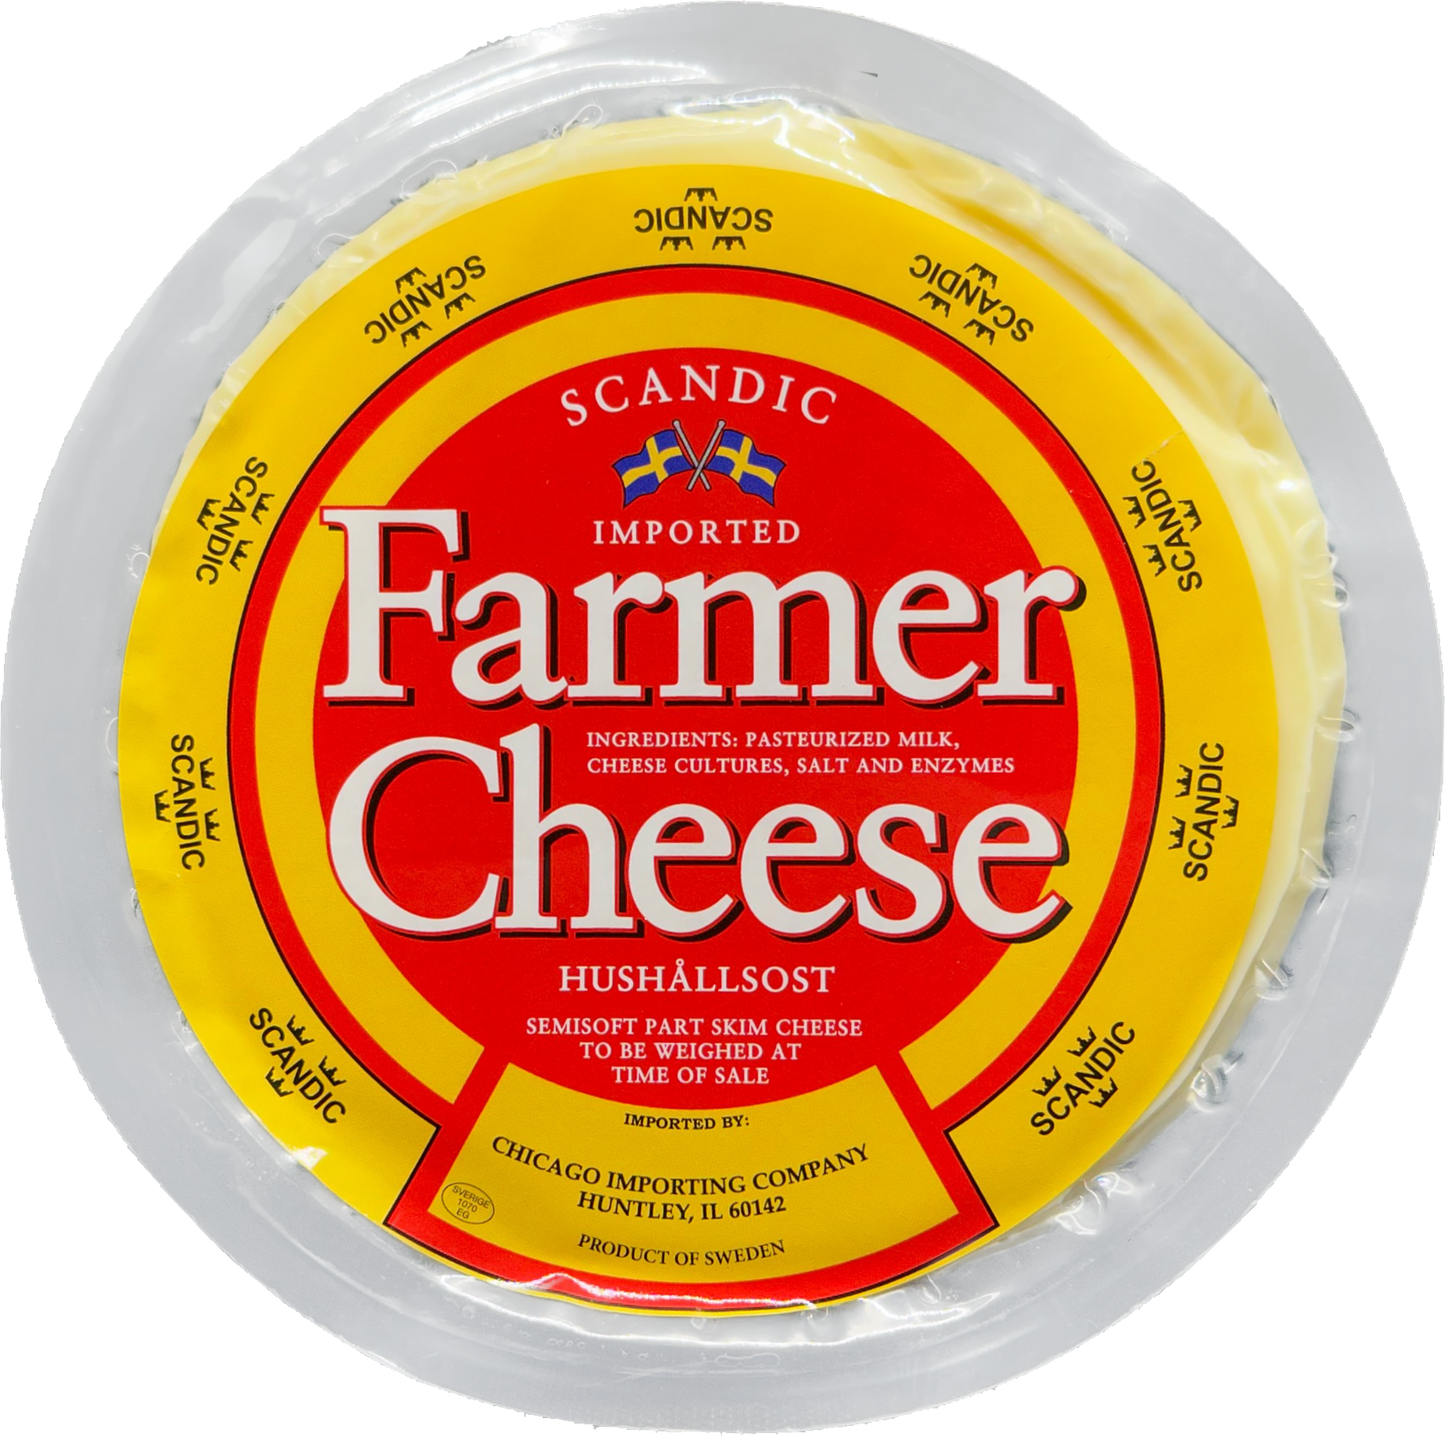 Swedish Farmer Cheese Wheel